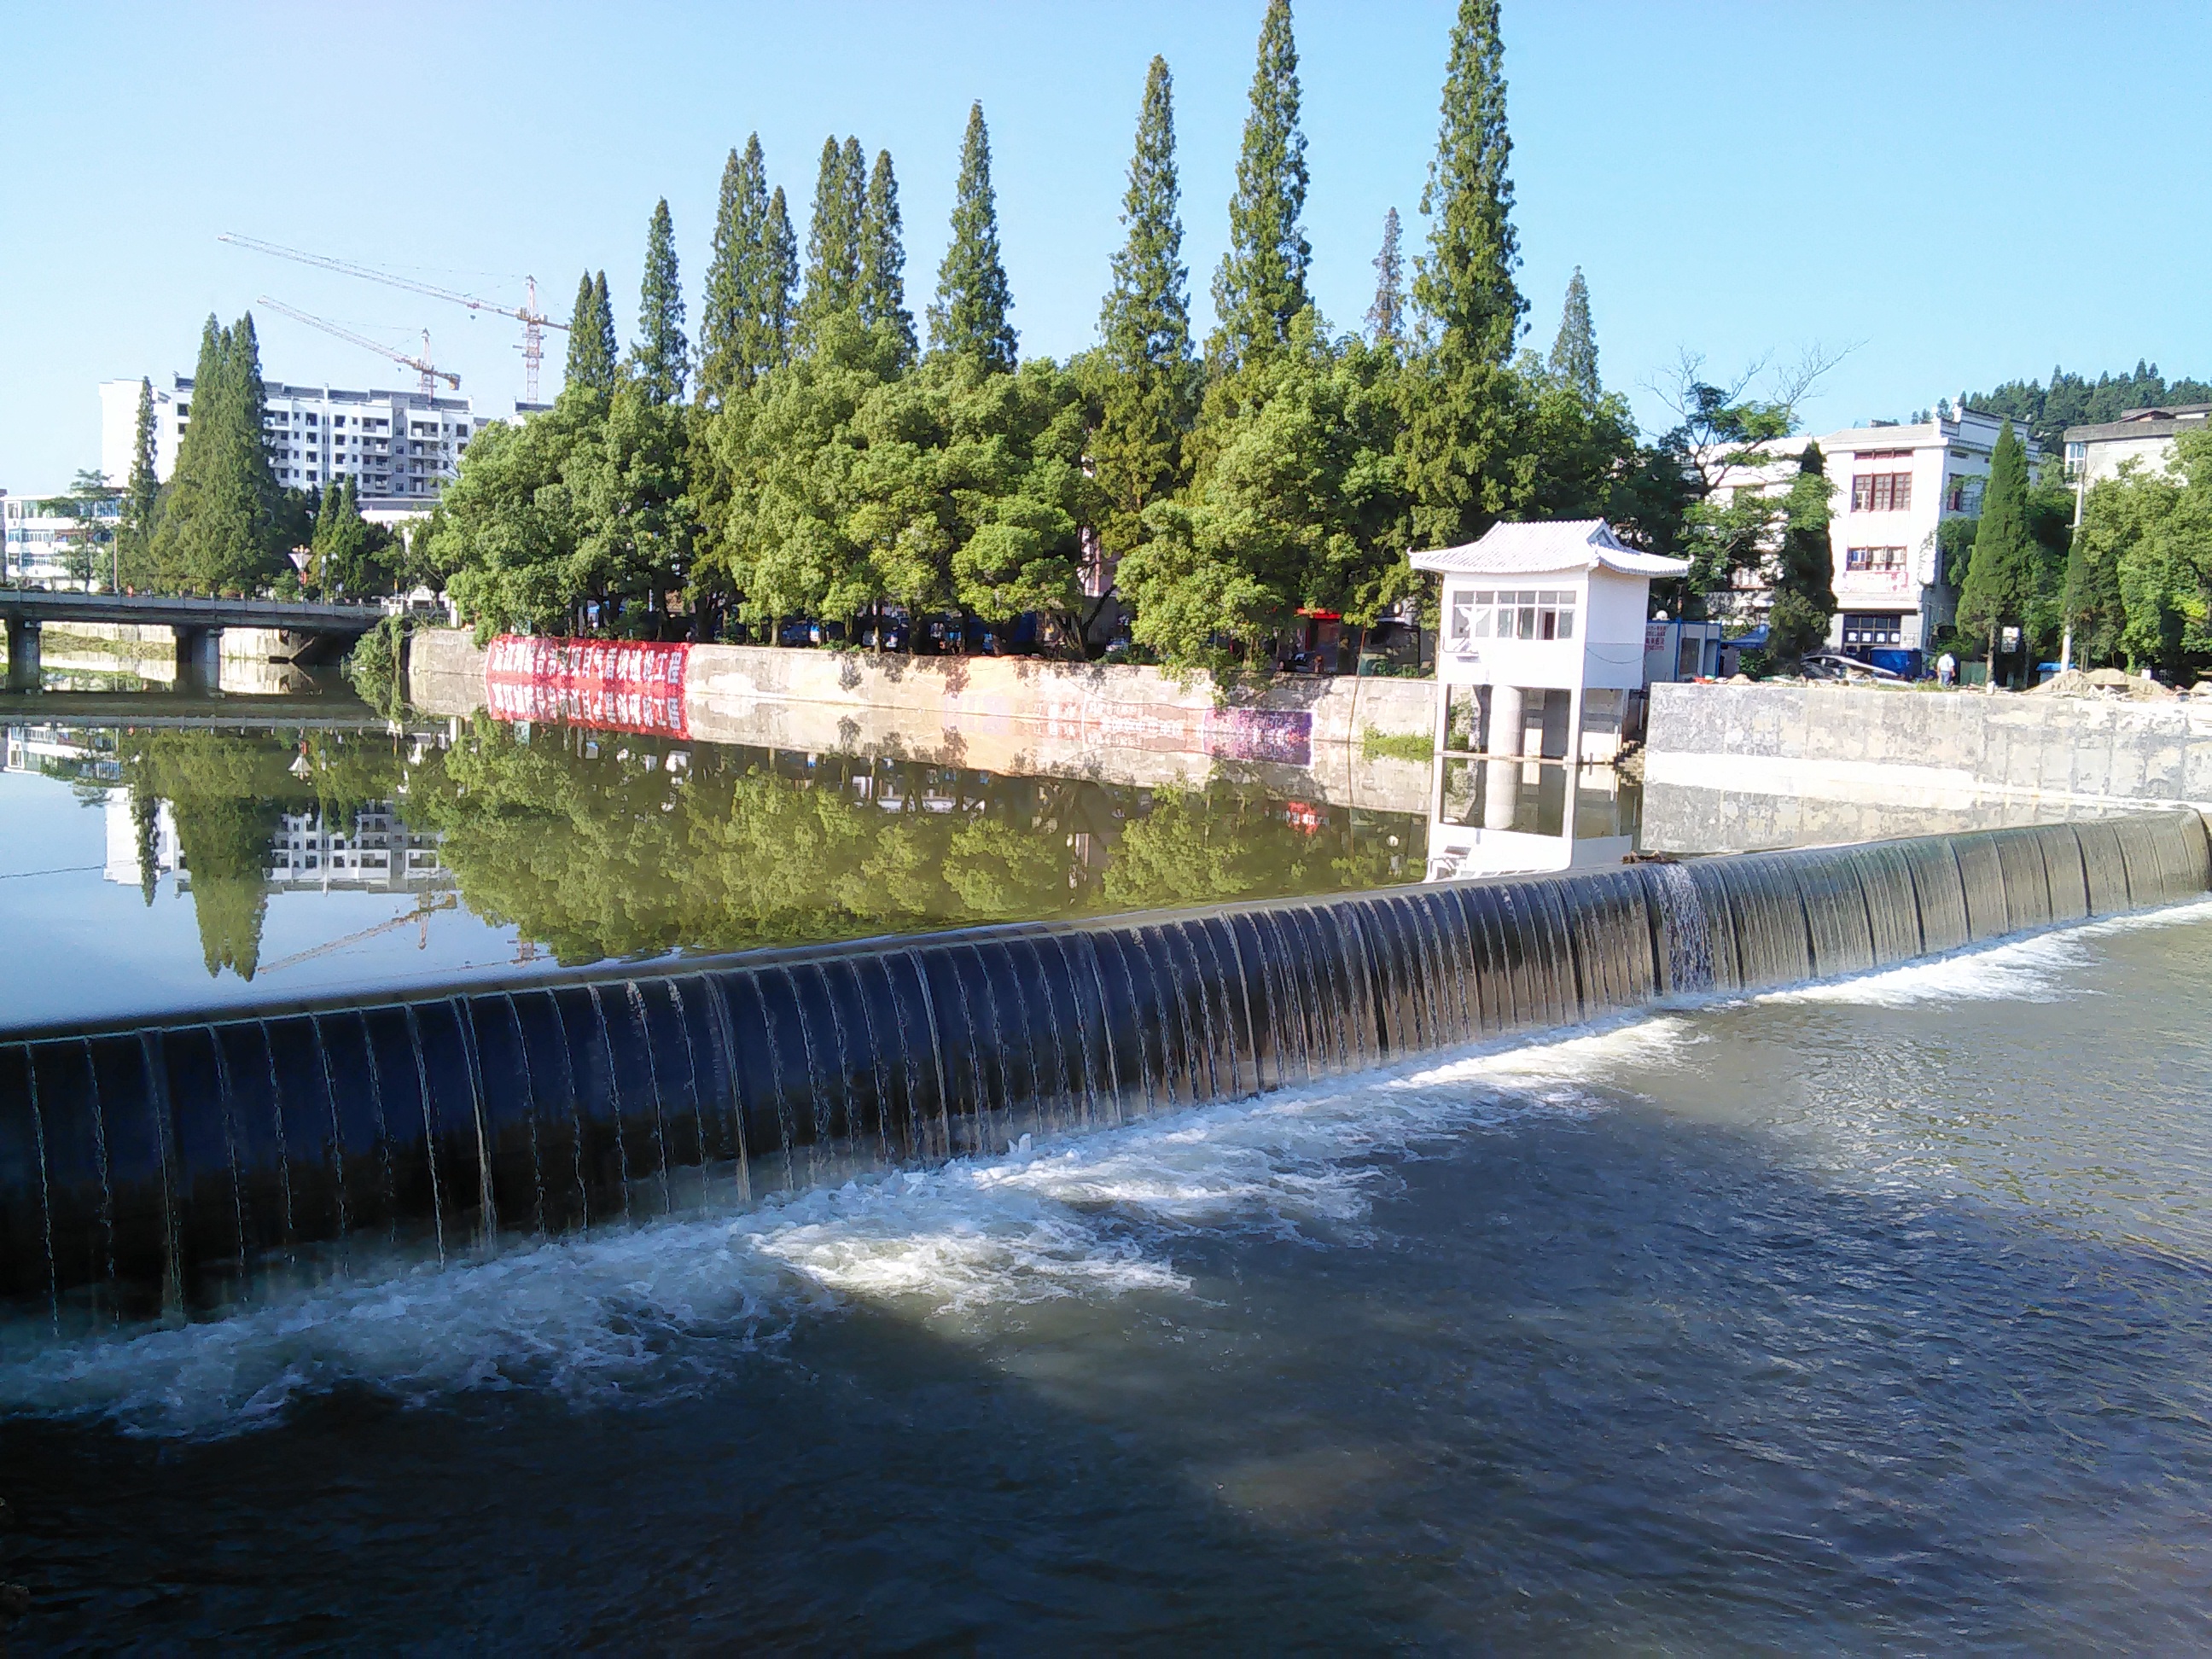 rubber Inflatable Waterproof Dam